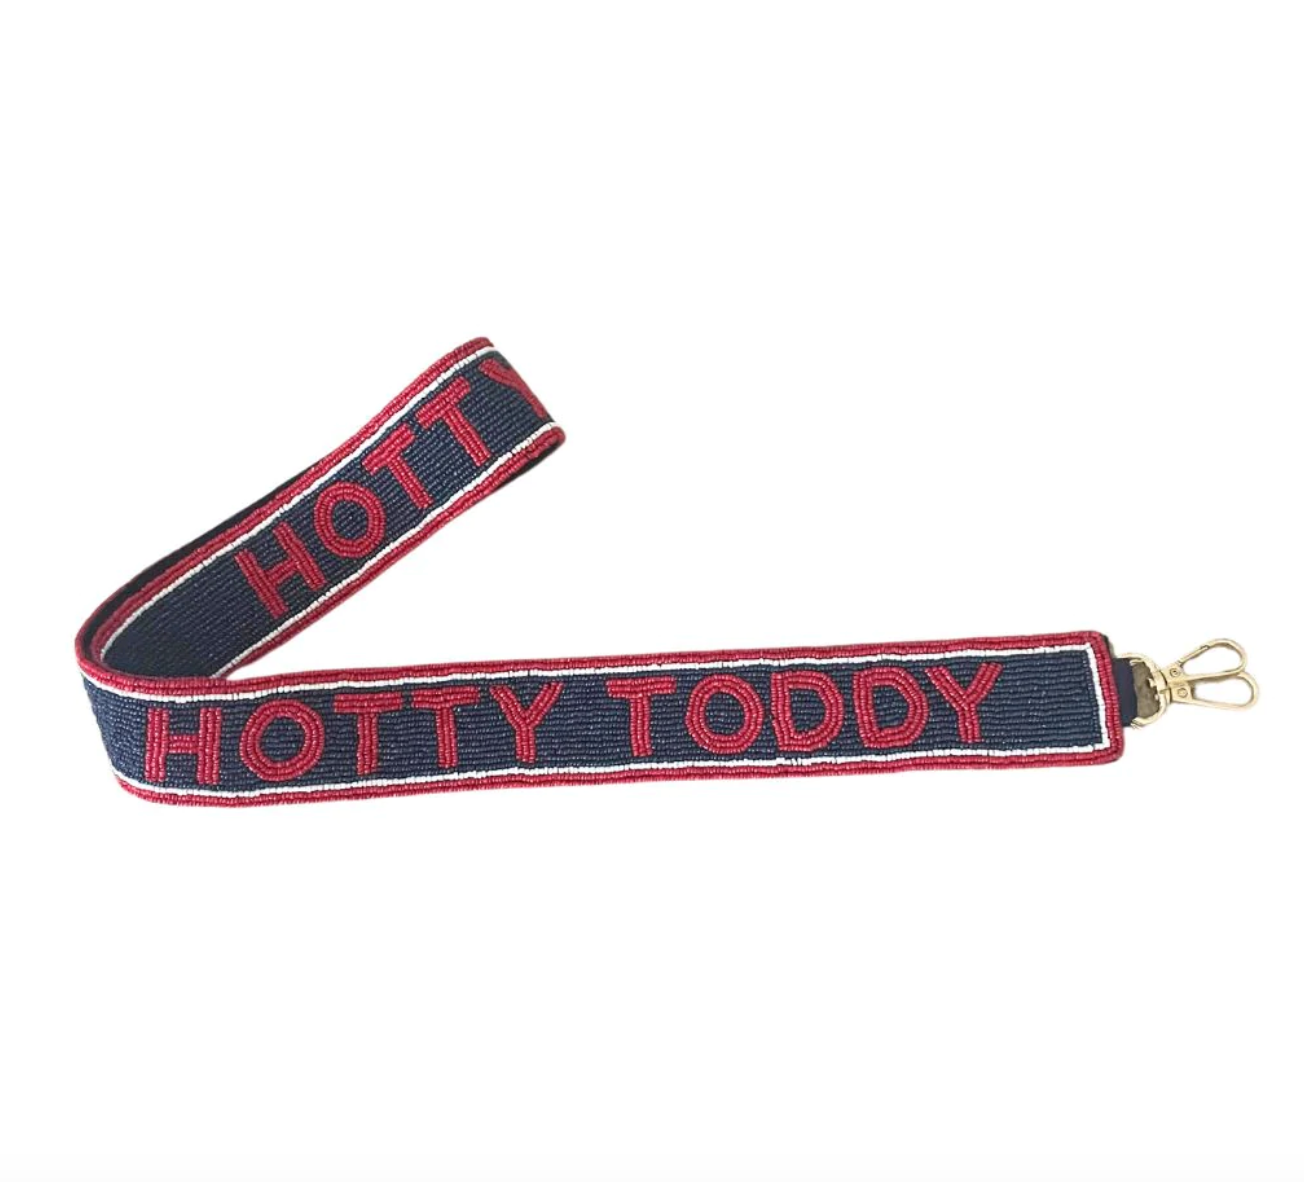 Hotty Toddy Bag Strap